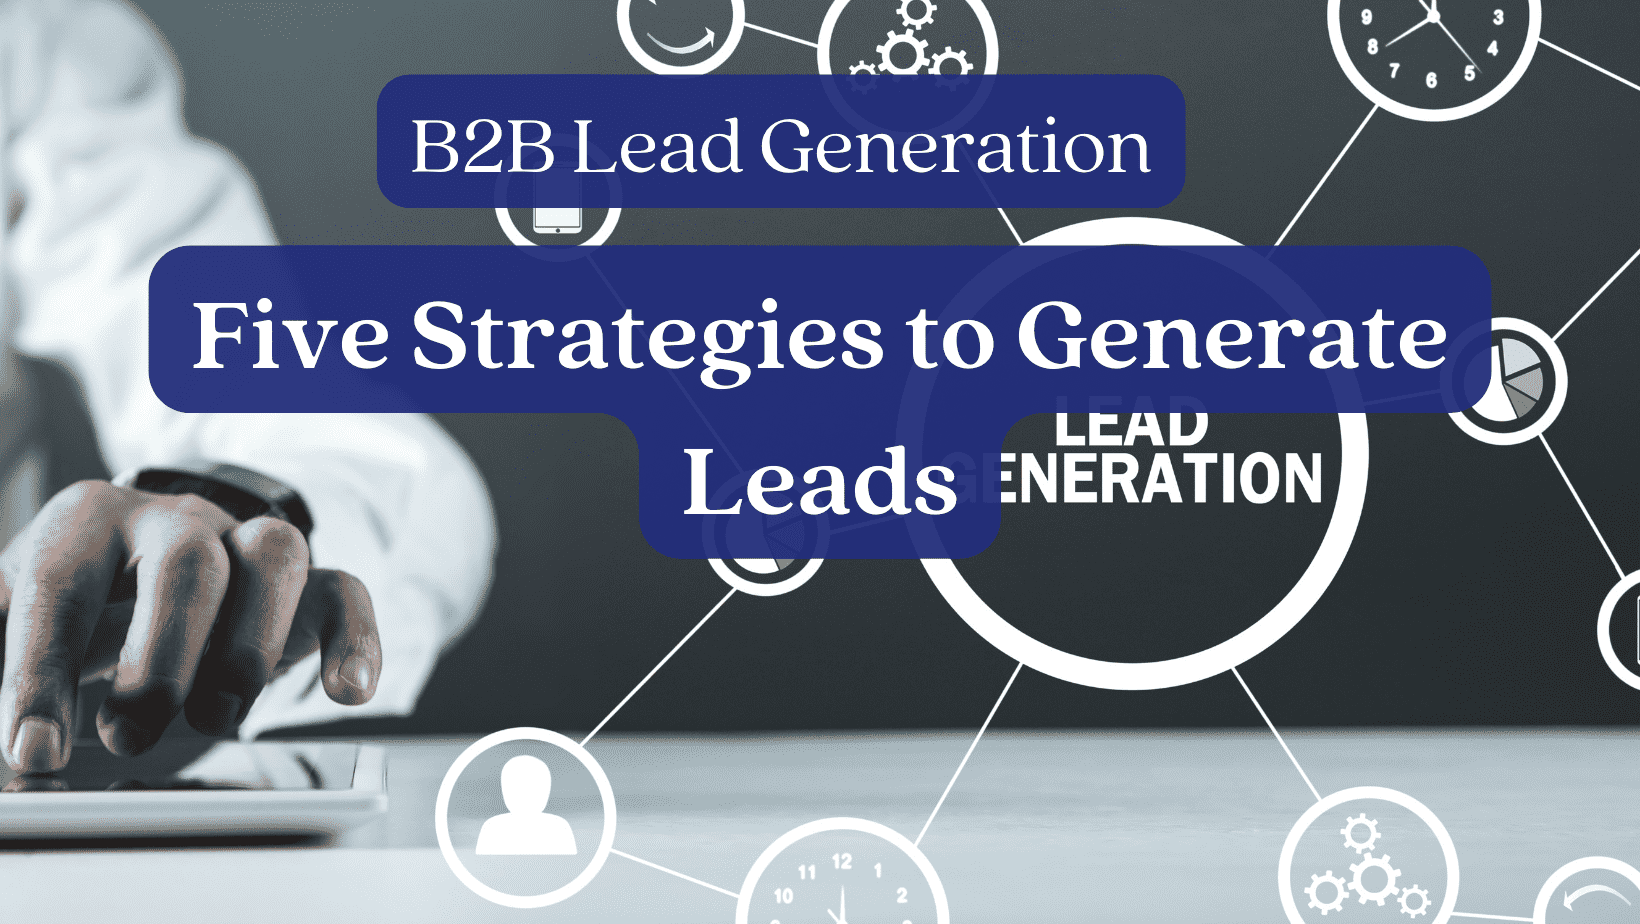 B2B Lead Generation: Five Strategies to Generate Leads